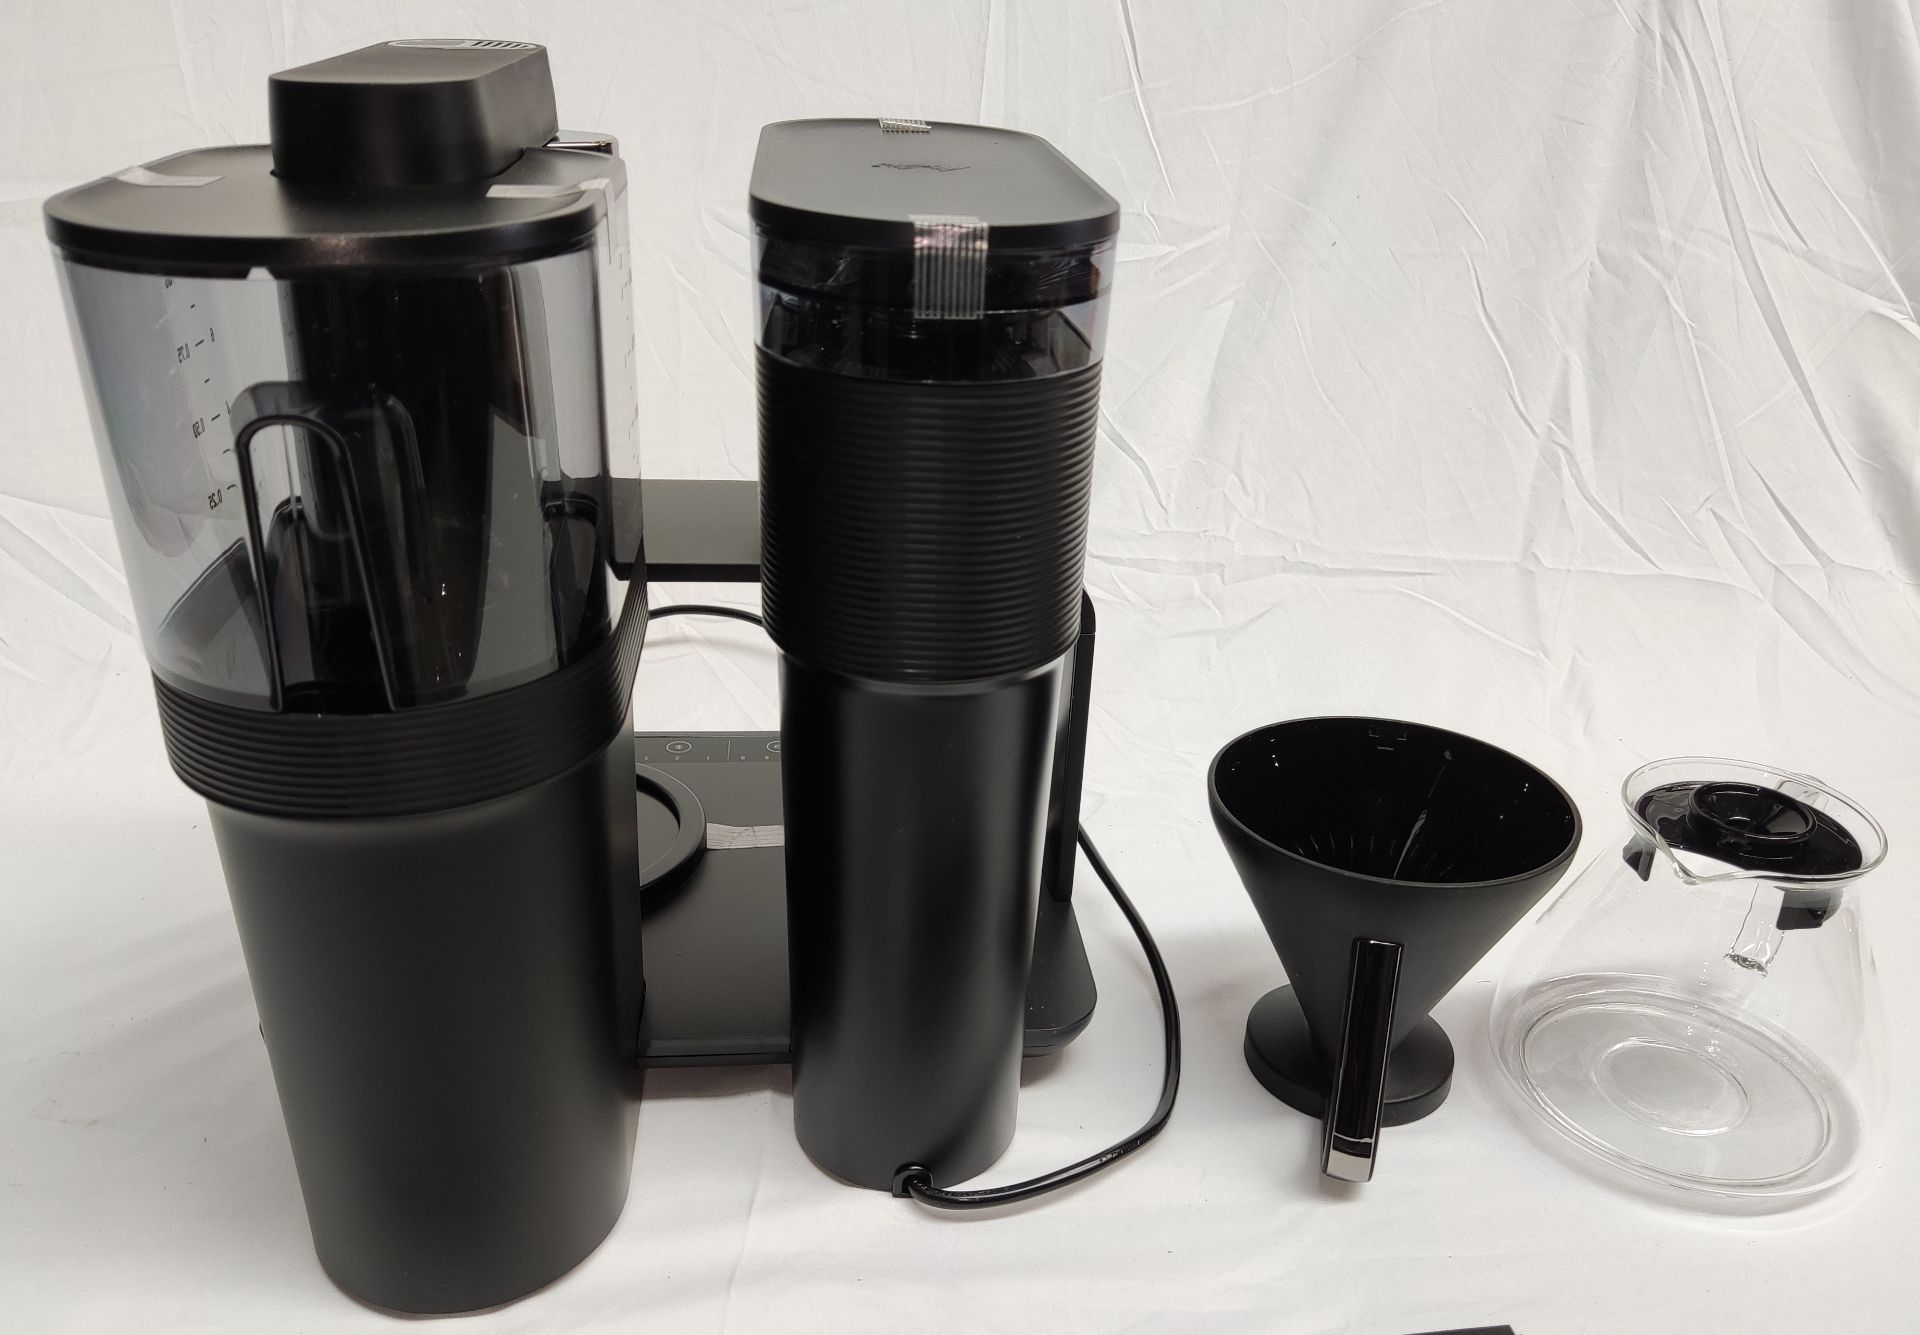 1 x MELITTA Epos Coffee Machine With Grinder - Boxed - Original RRP £399 - Ref: 7129012/HJL350/C19/ - Image 6 of 14